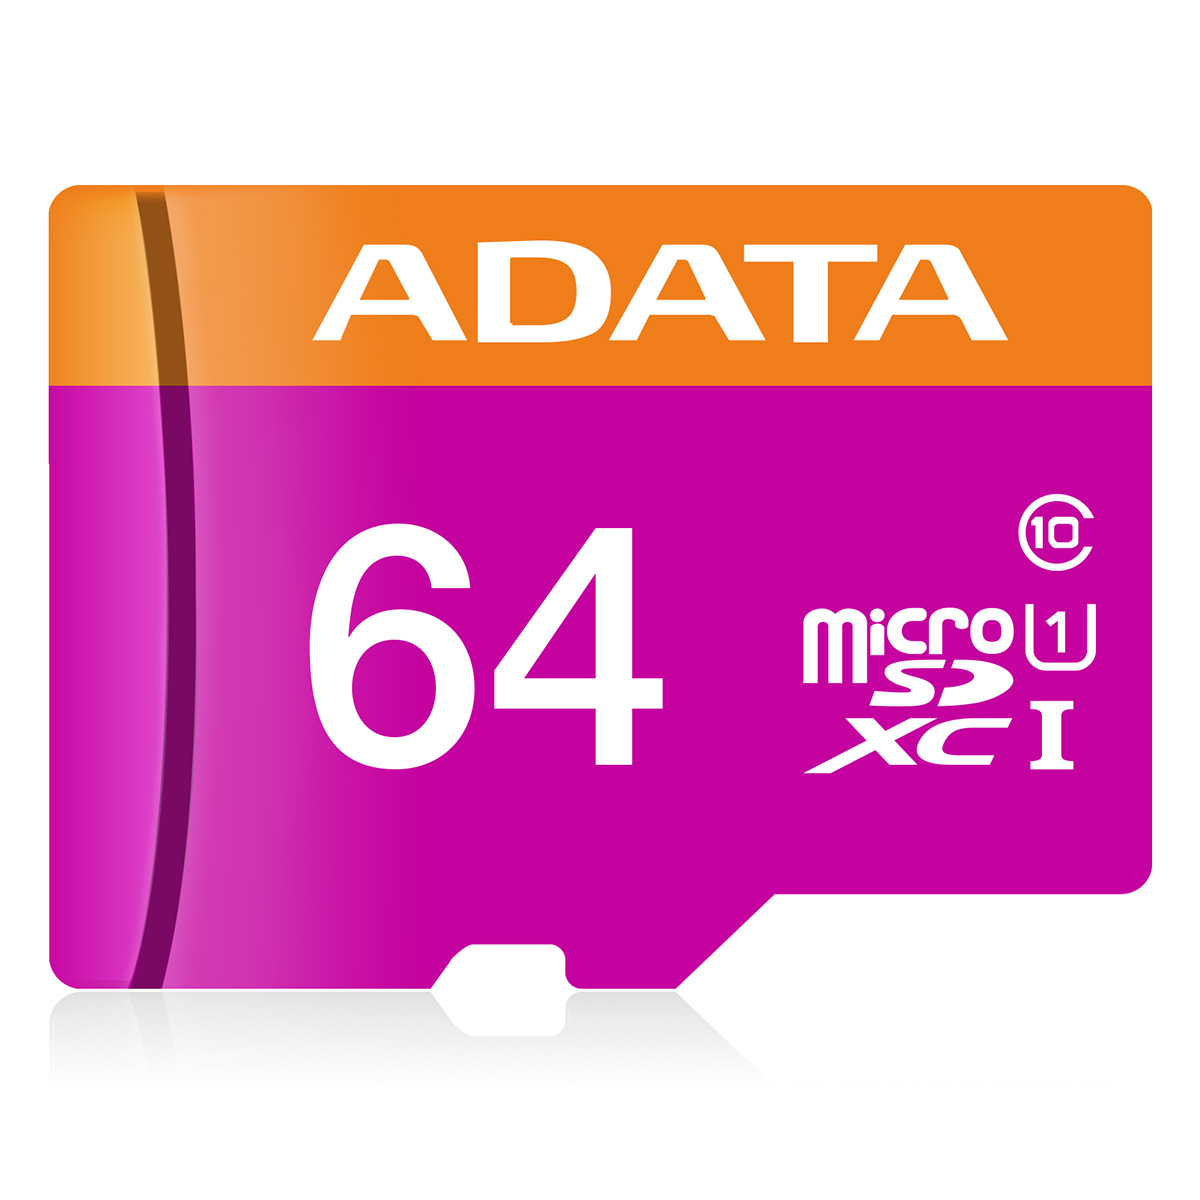 64GB ADATA Premier microSDXC UHS-I klass 10, 80MB/s